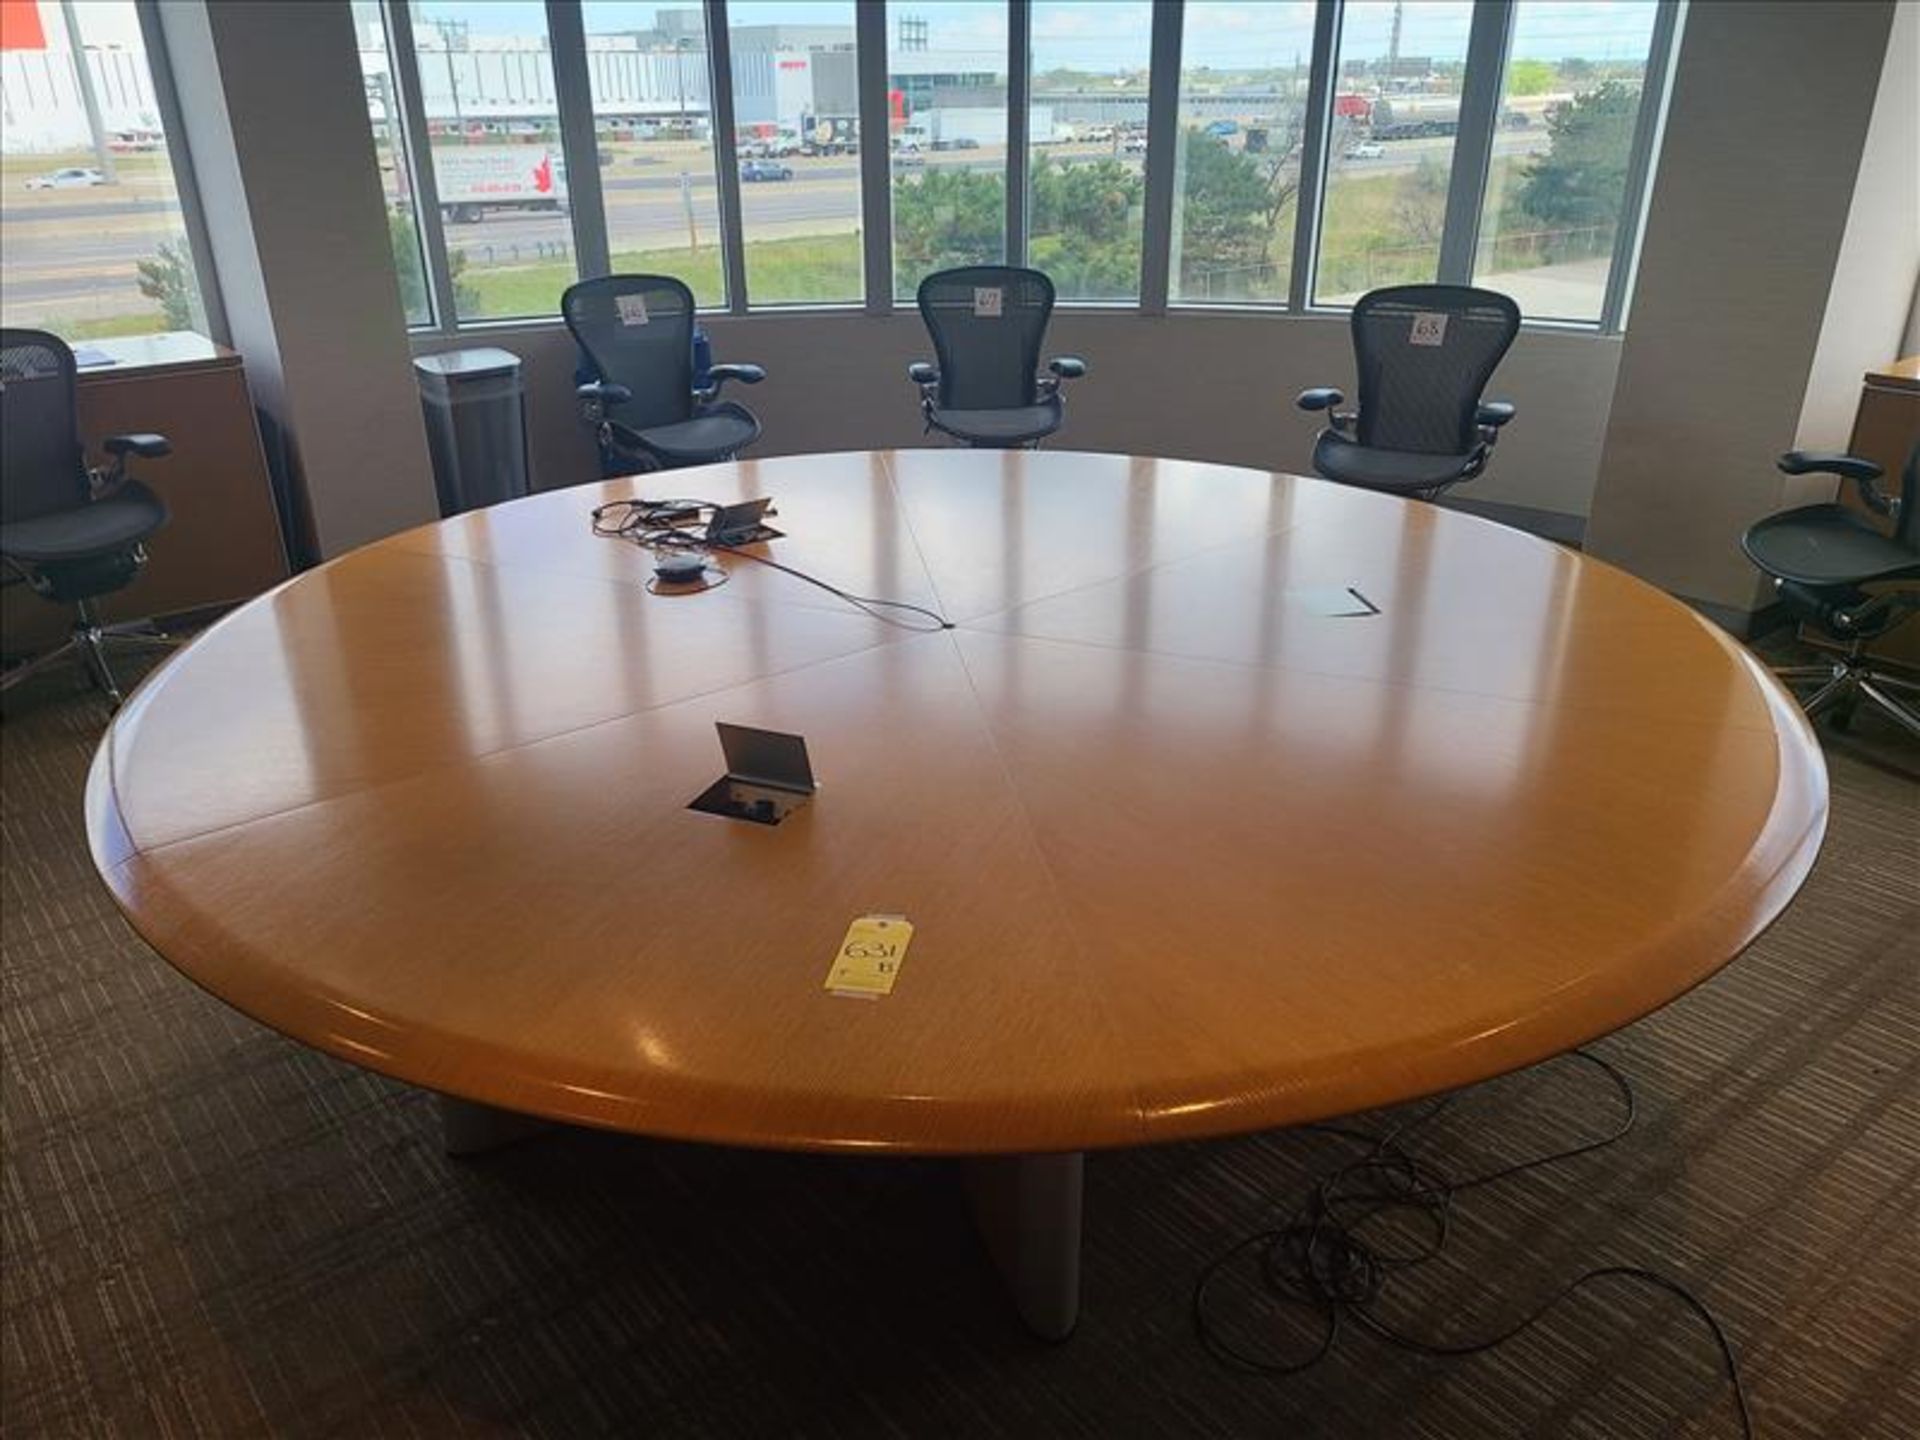 Boardroom Meeting Table approx. 118 in. dia (Qty 1) (Floor 3) (Boardroom 301)